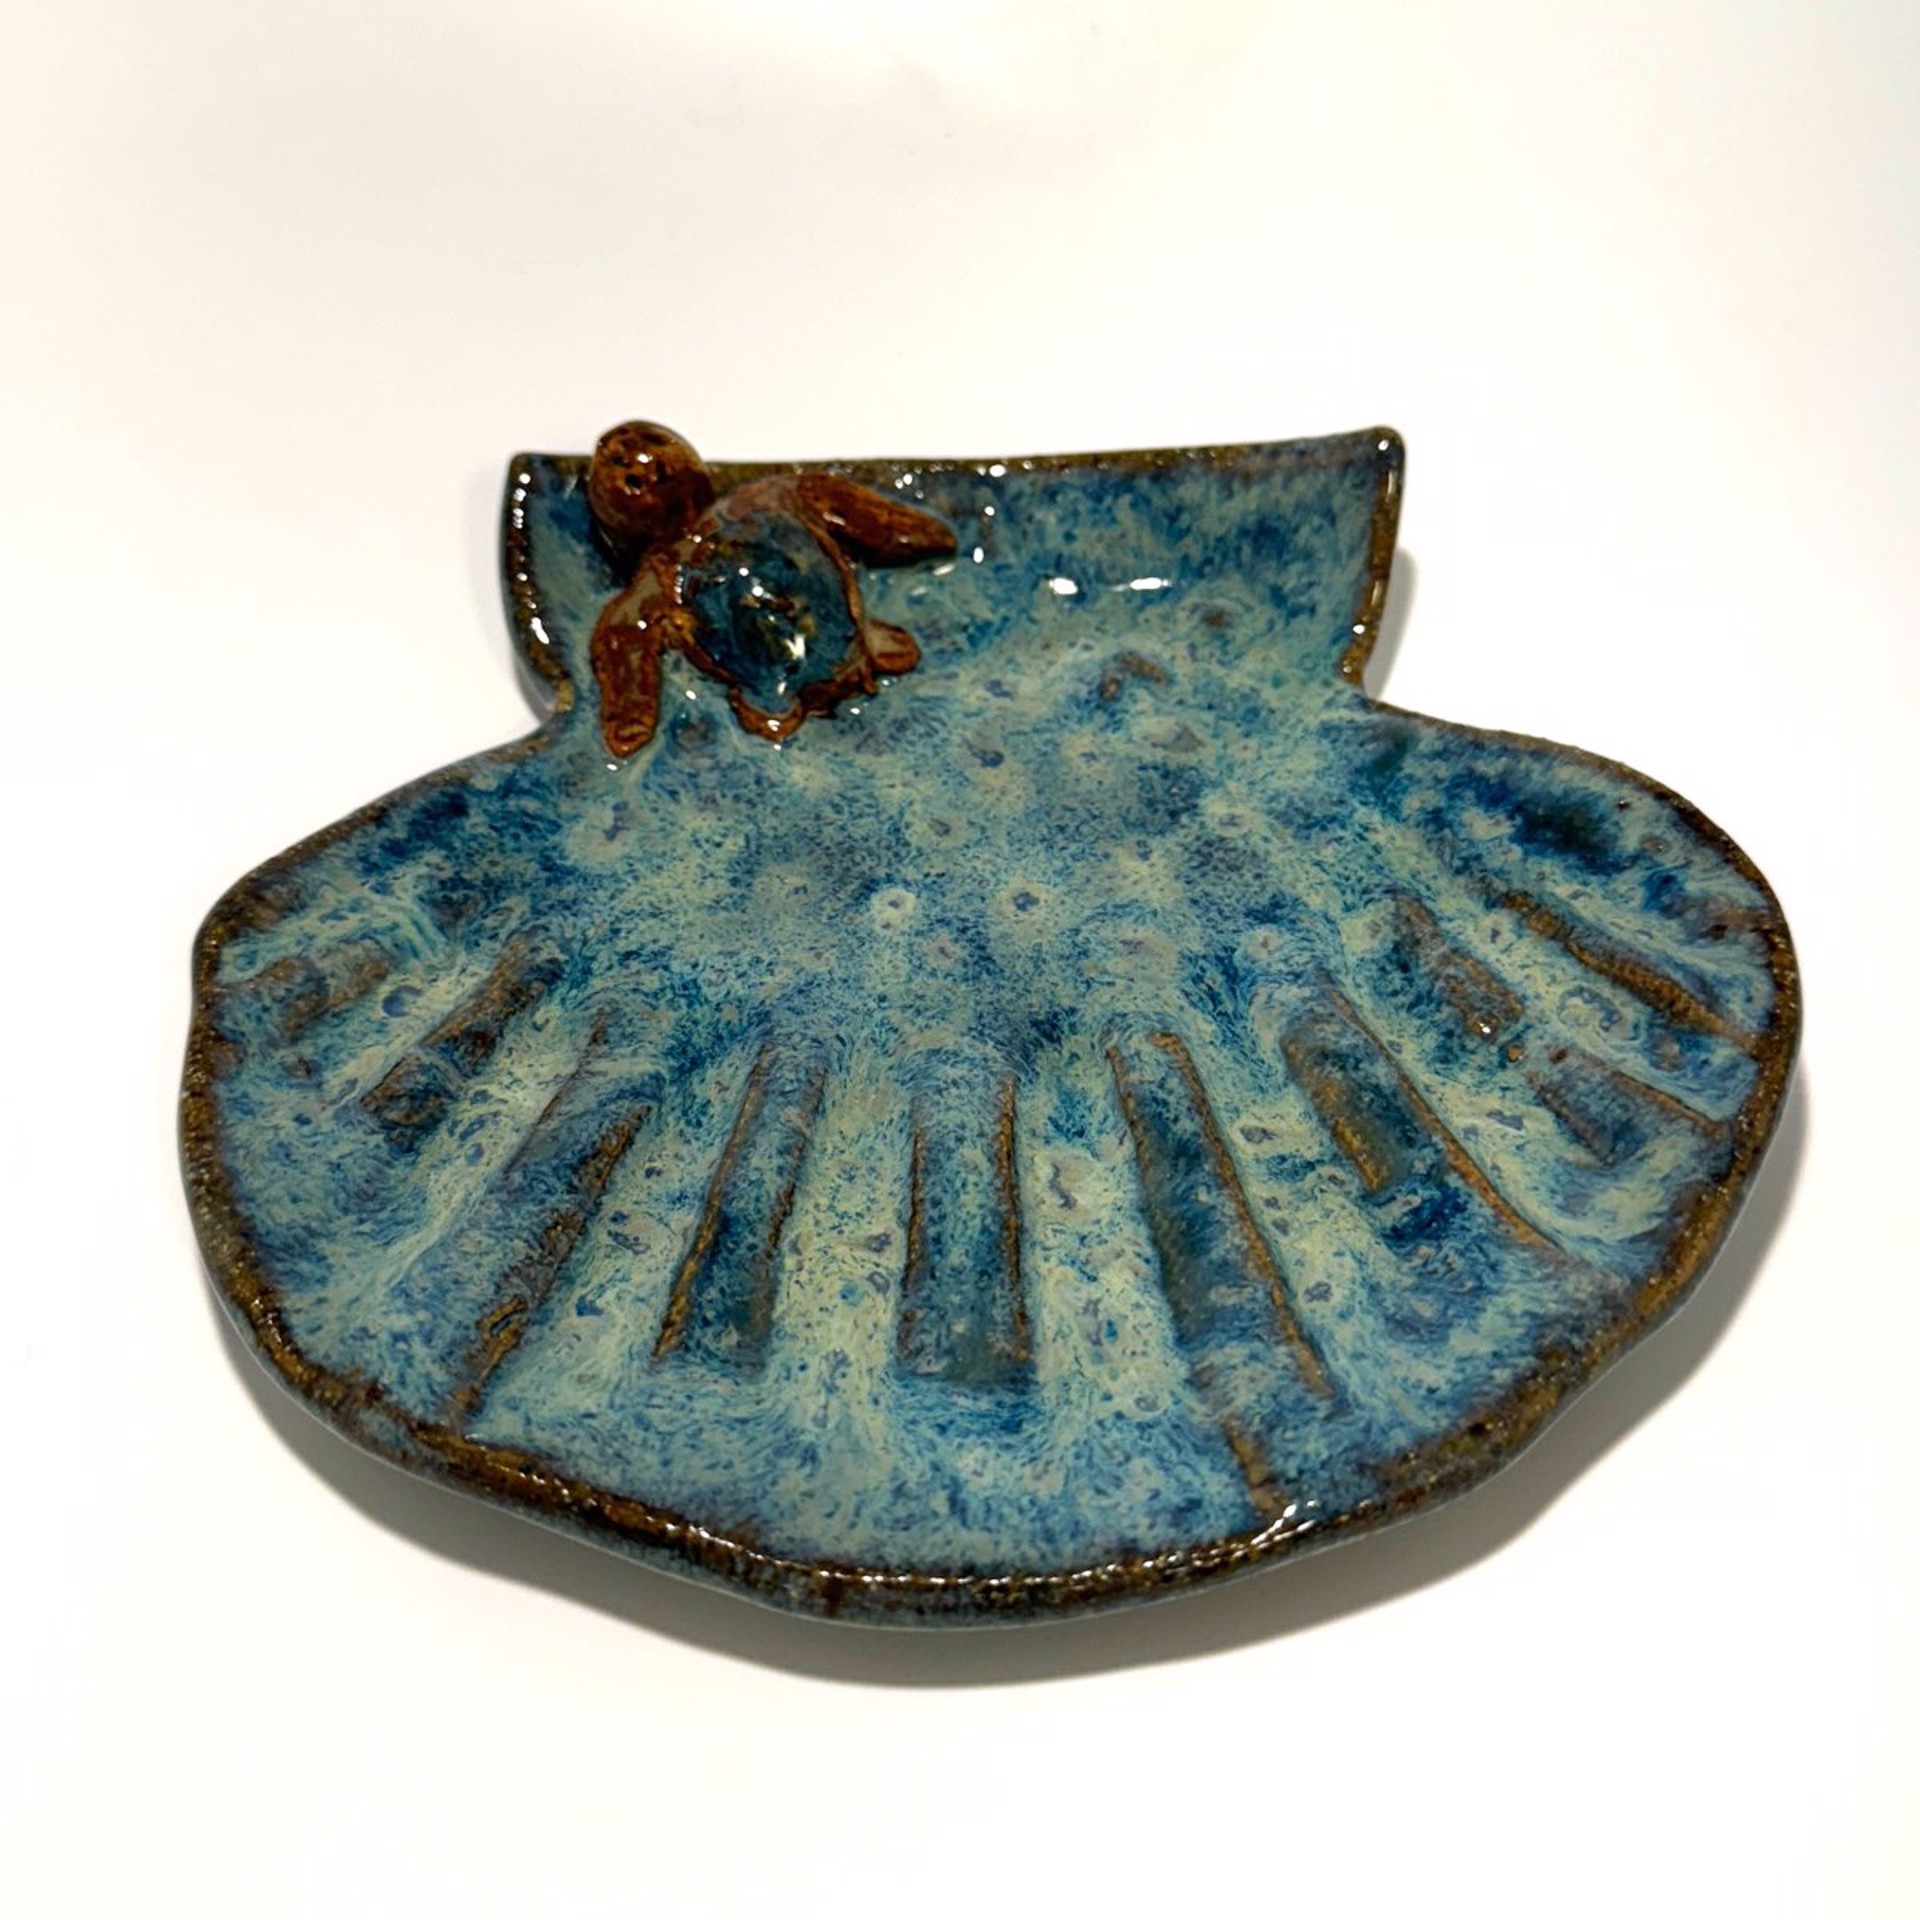 Shell Dish with Turtle (Blue Glaze) LG24-1228 by Jim & Steffi Logan